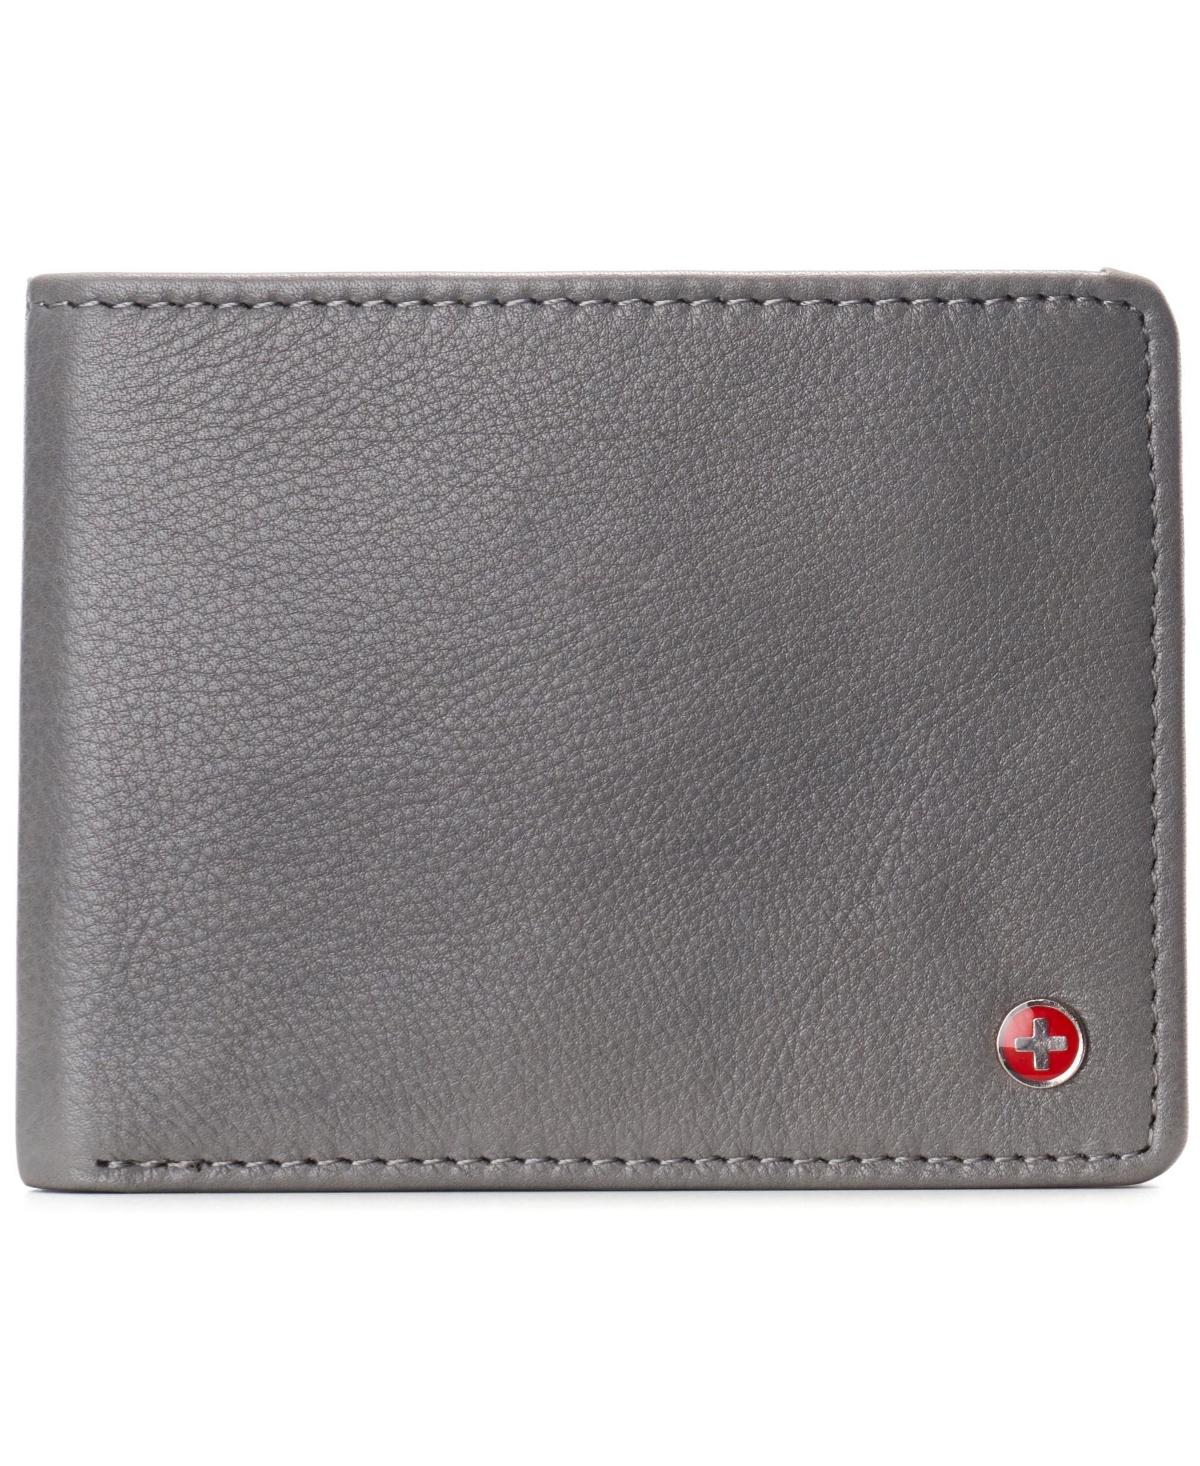 Mens Genuine Leather Passcase Bifold Wallet Rfid Safe 2 Id Windows - Black